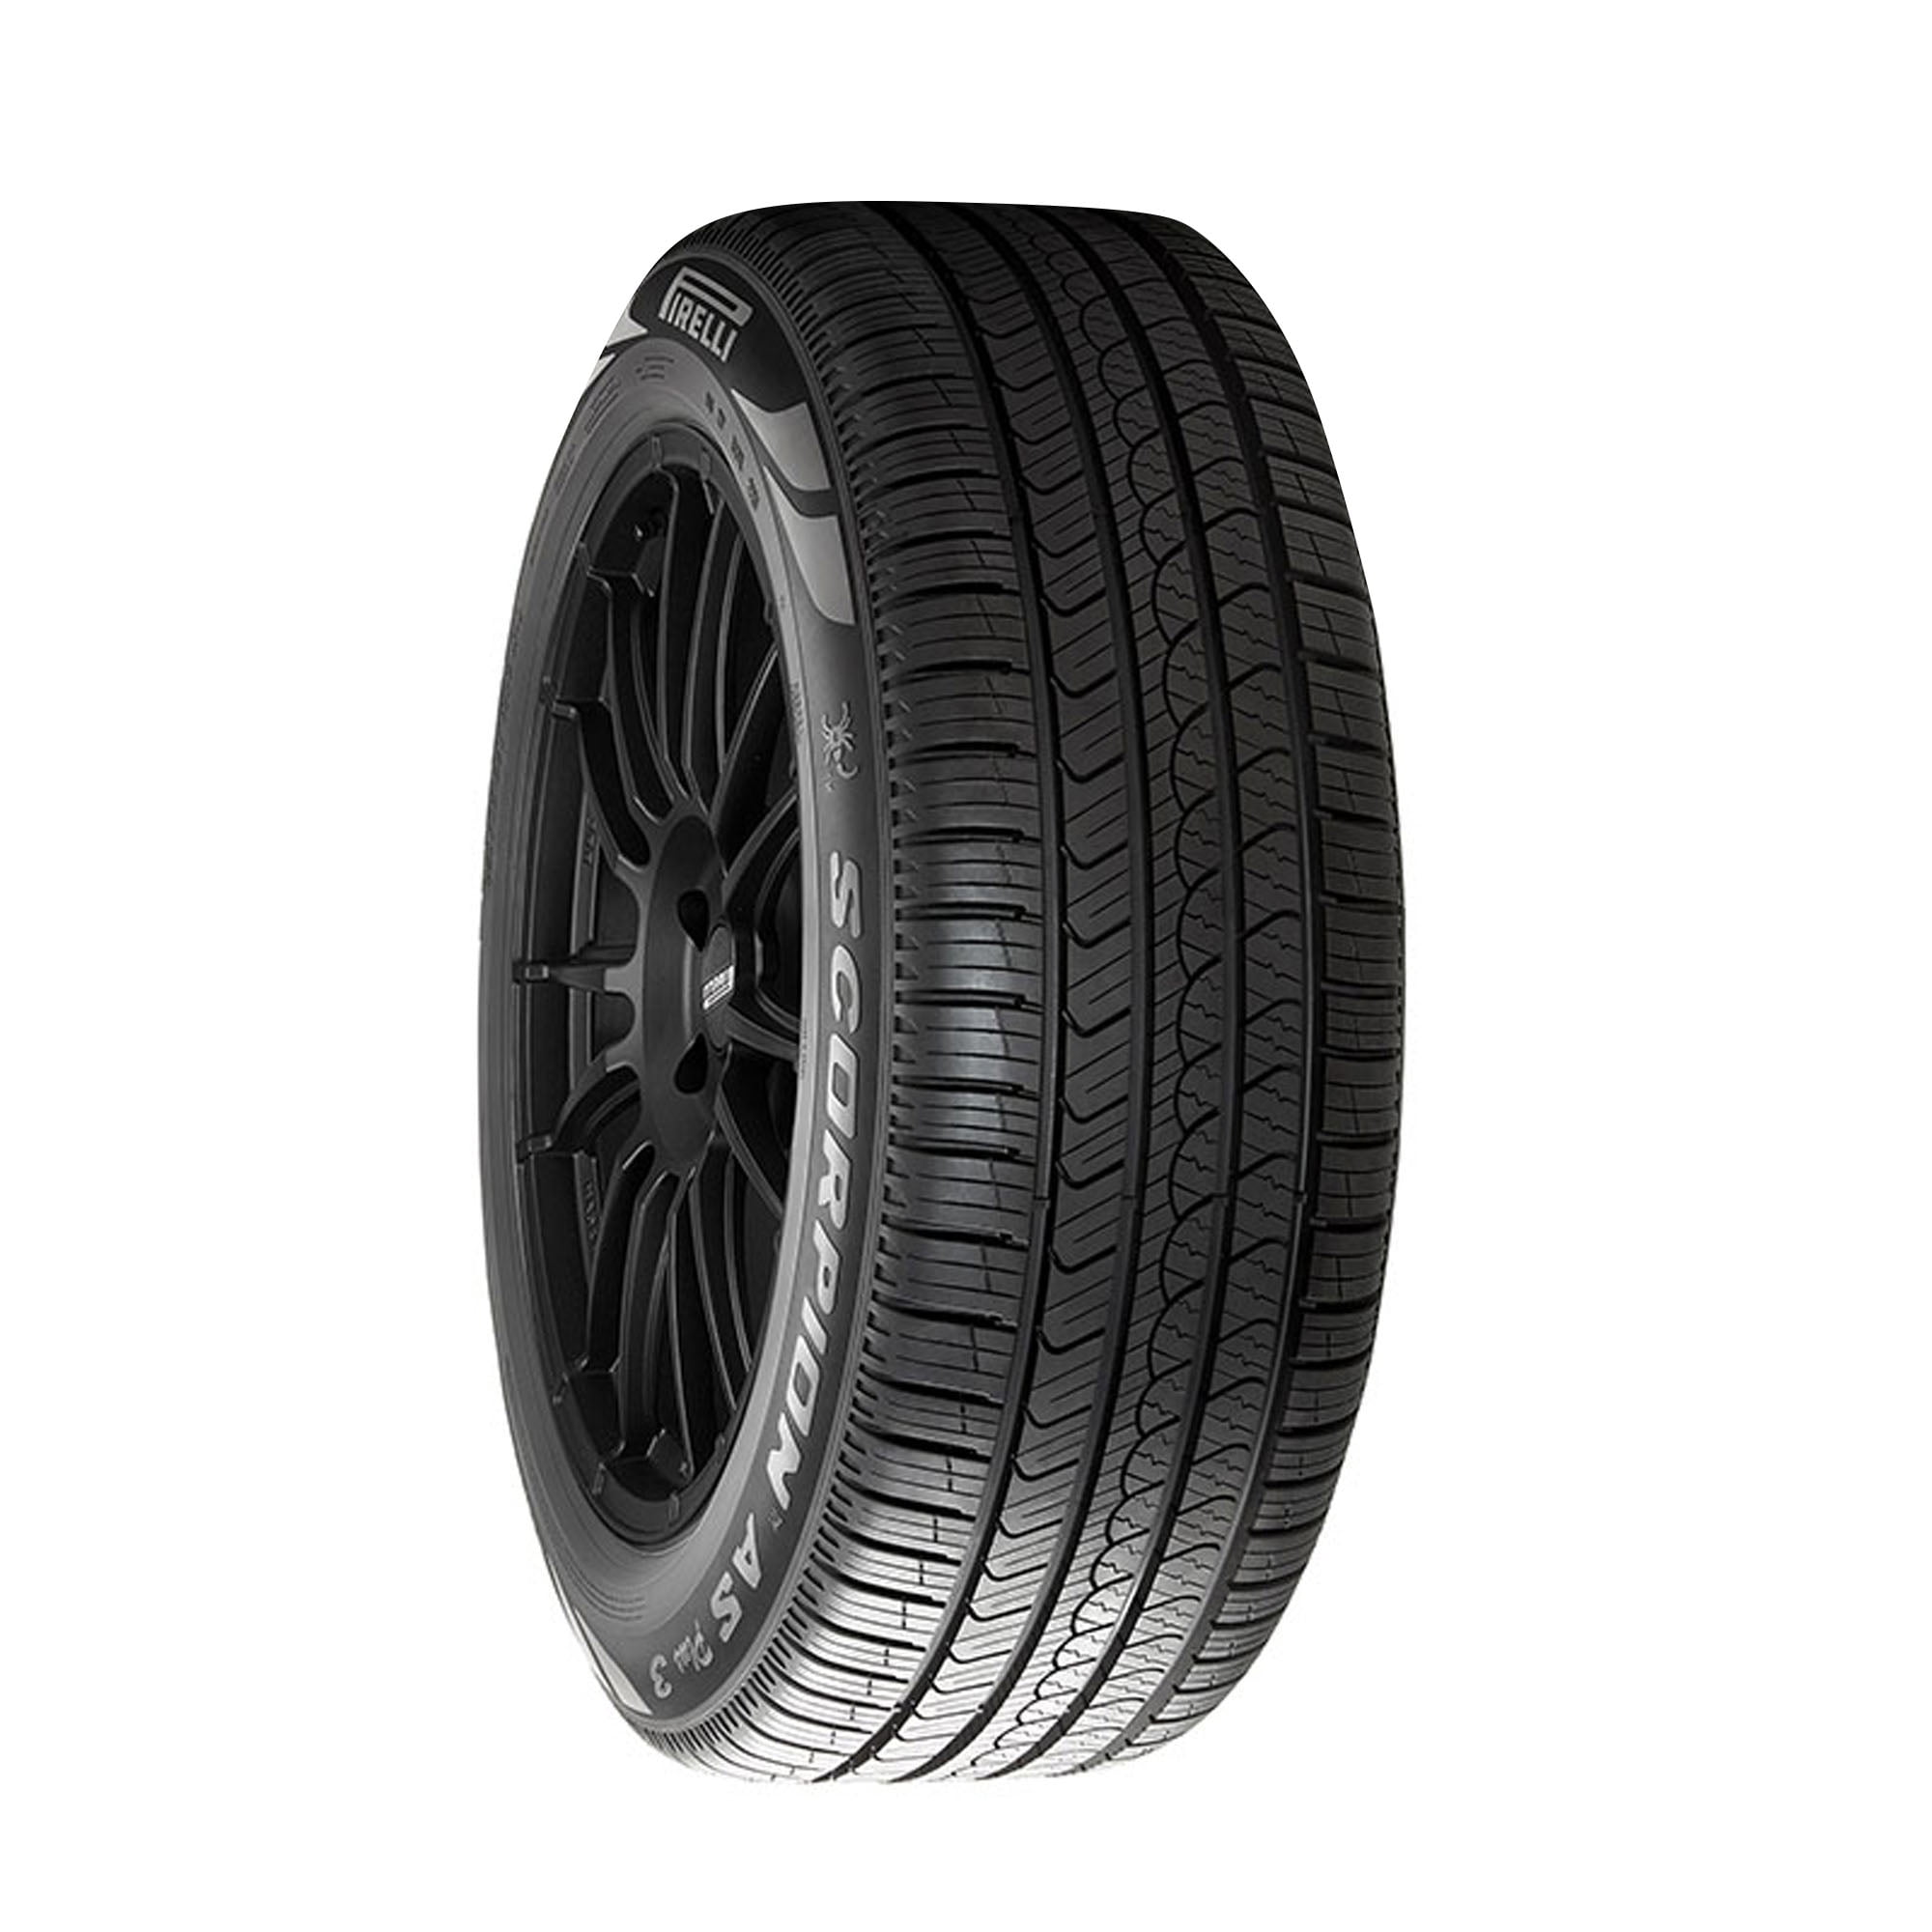 All SUV/Crossover Plus Scorpion Season 235/65R17 3 All 104H Season Tire Pirelli